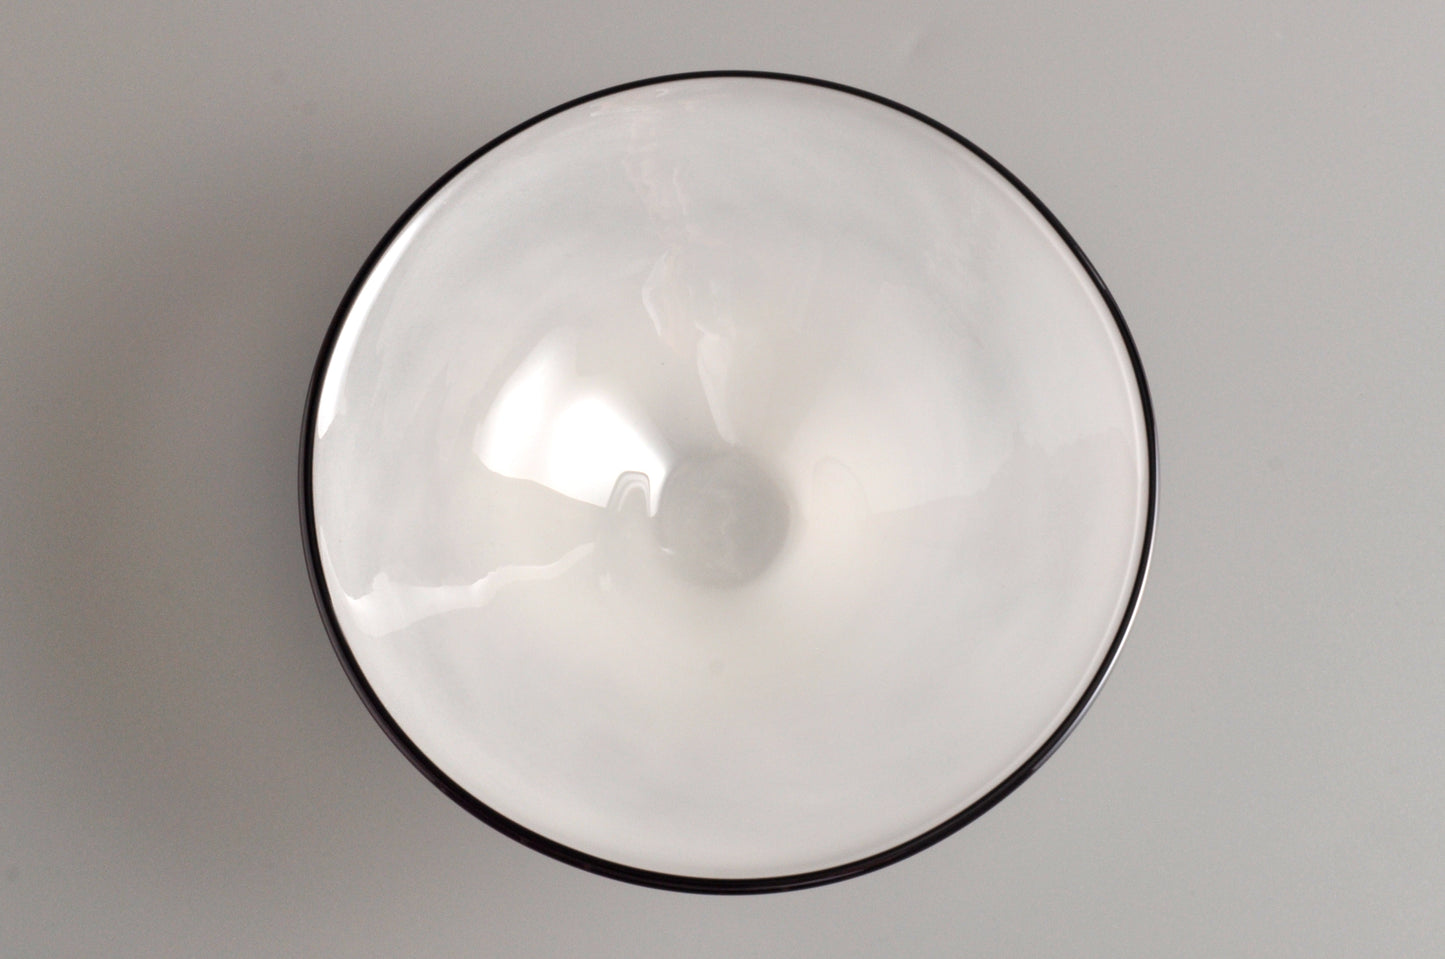 kasumi bowl S ivory 3649